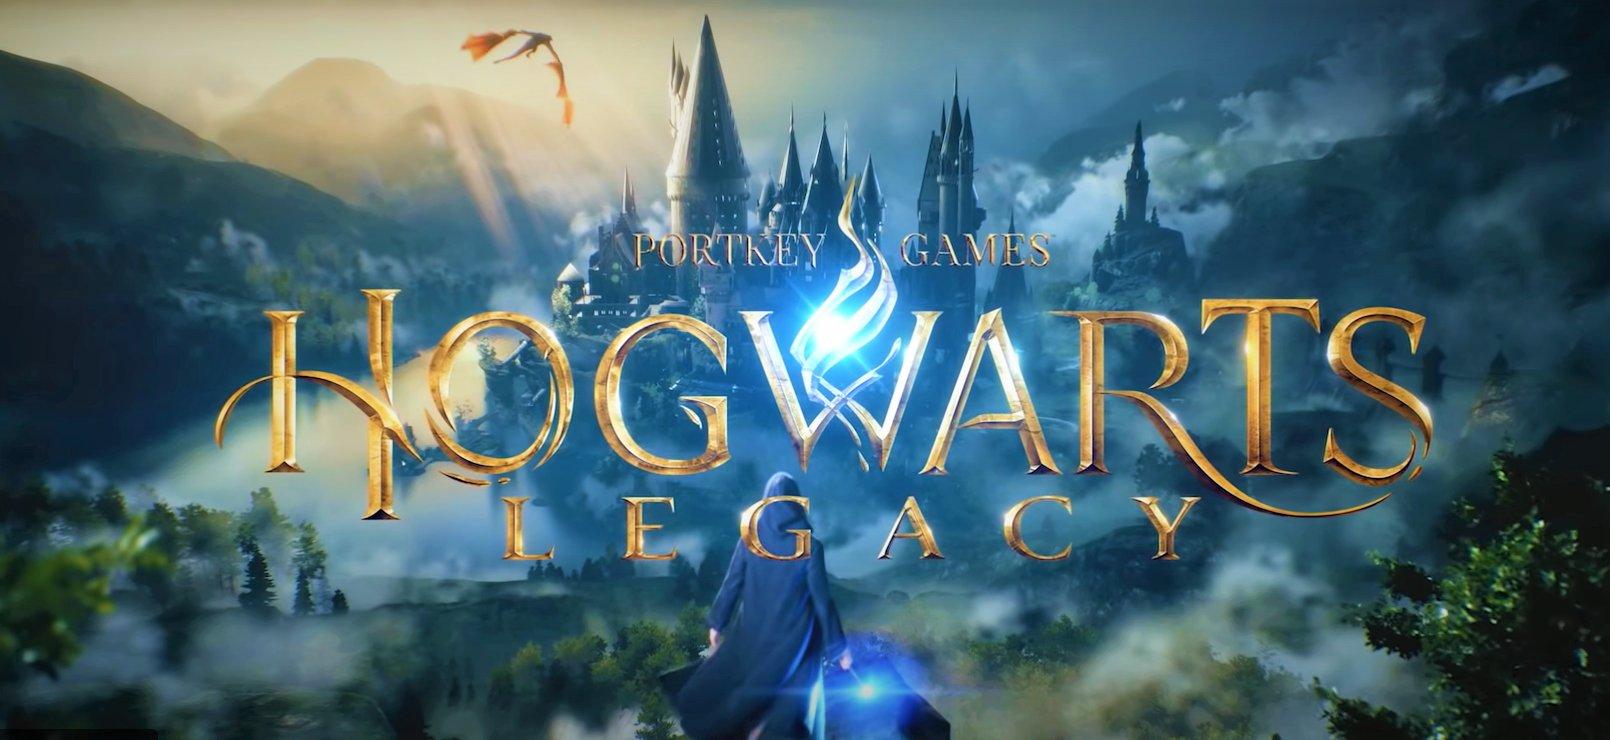 HOGWARTS LEGACY Gameplay Demo 1 Hour [4k UltraHD] 